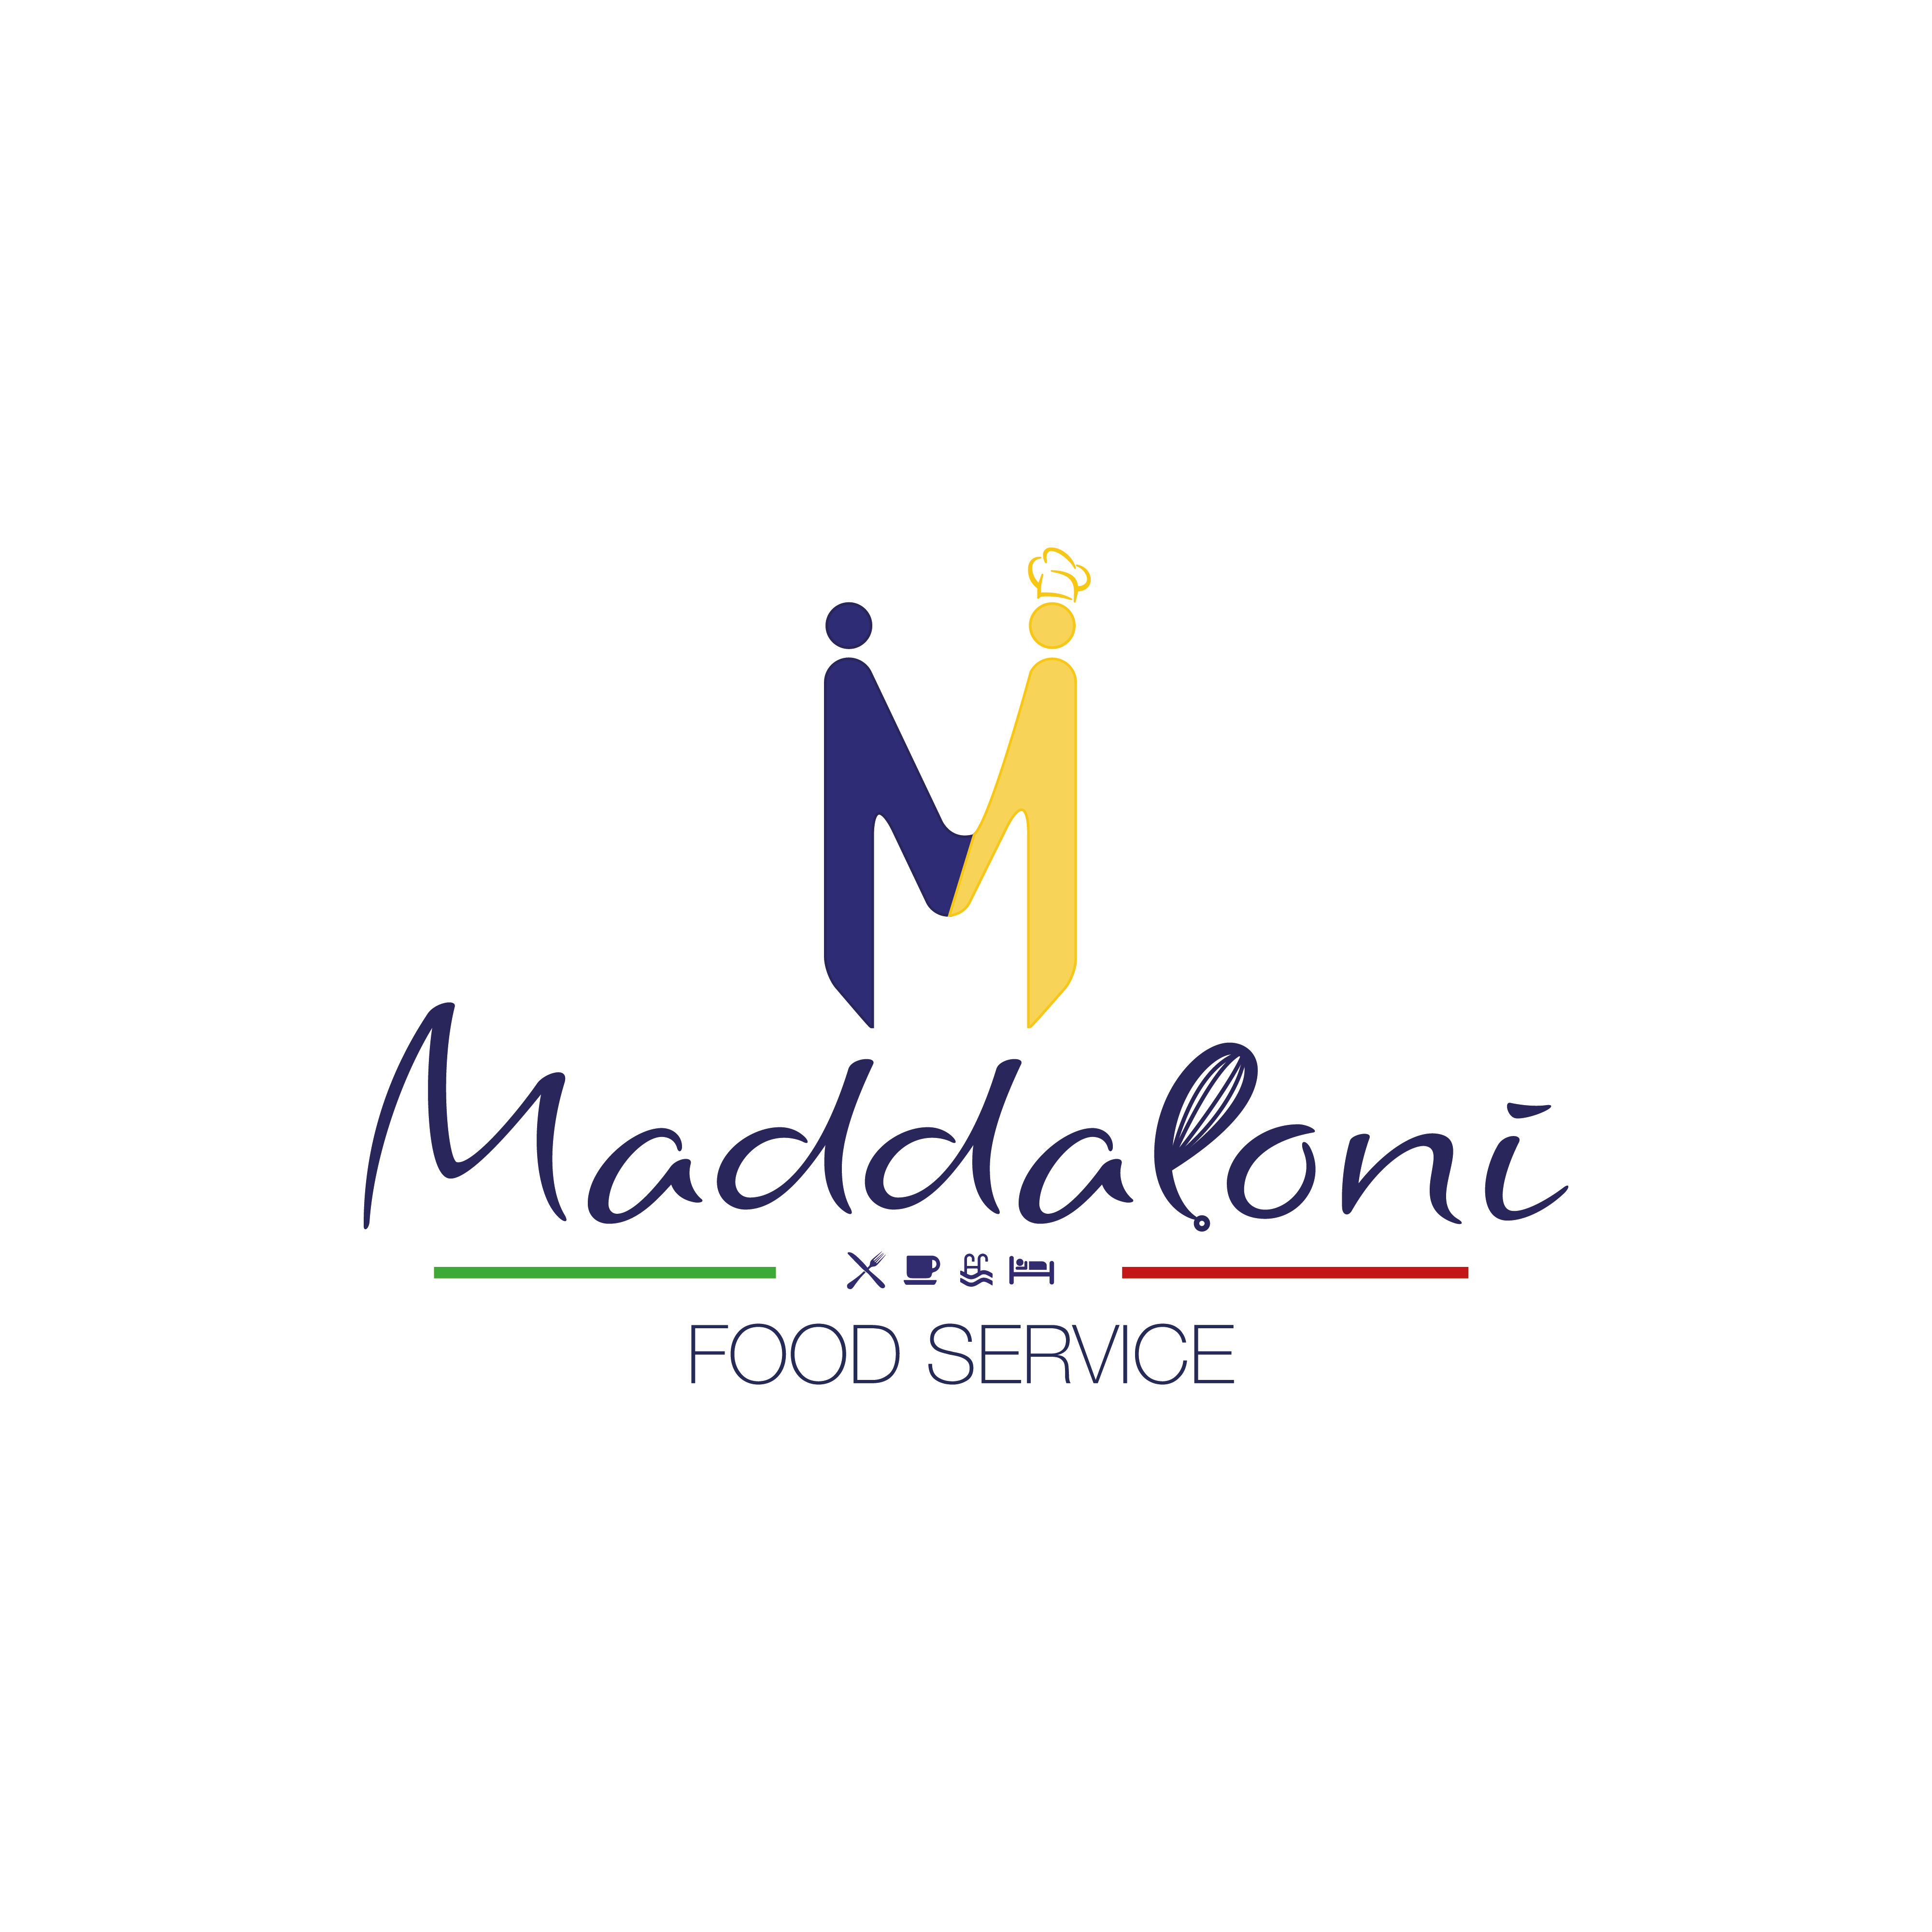 maddaloni srl logo